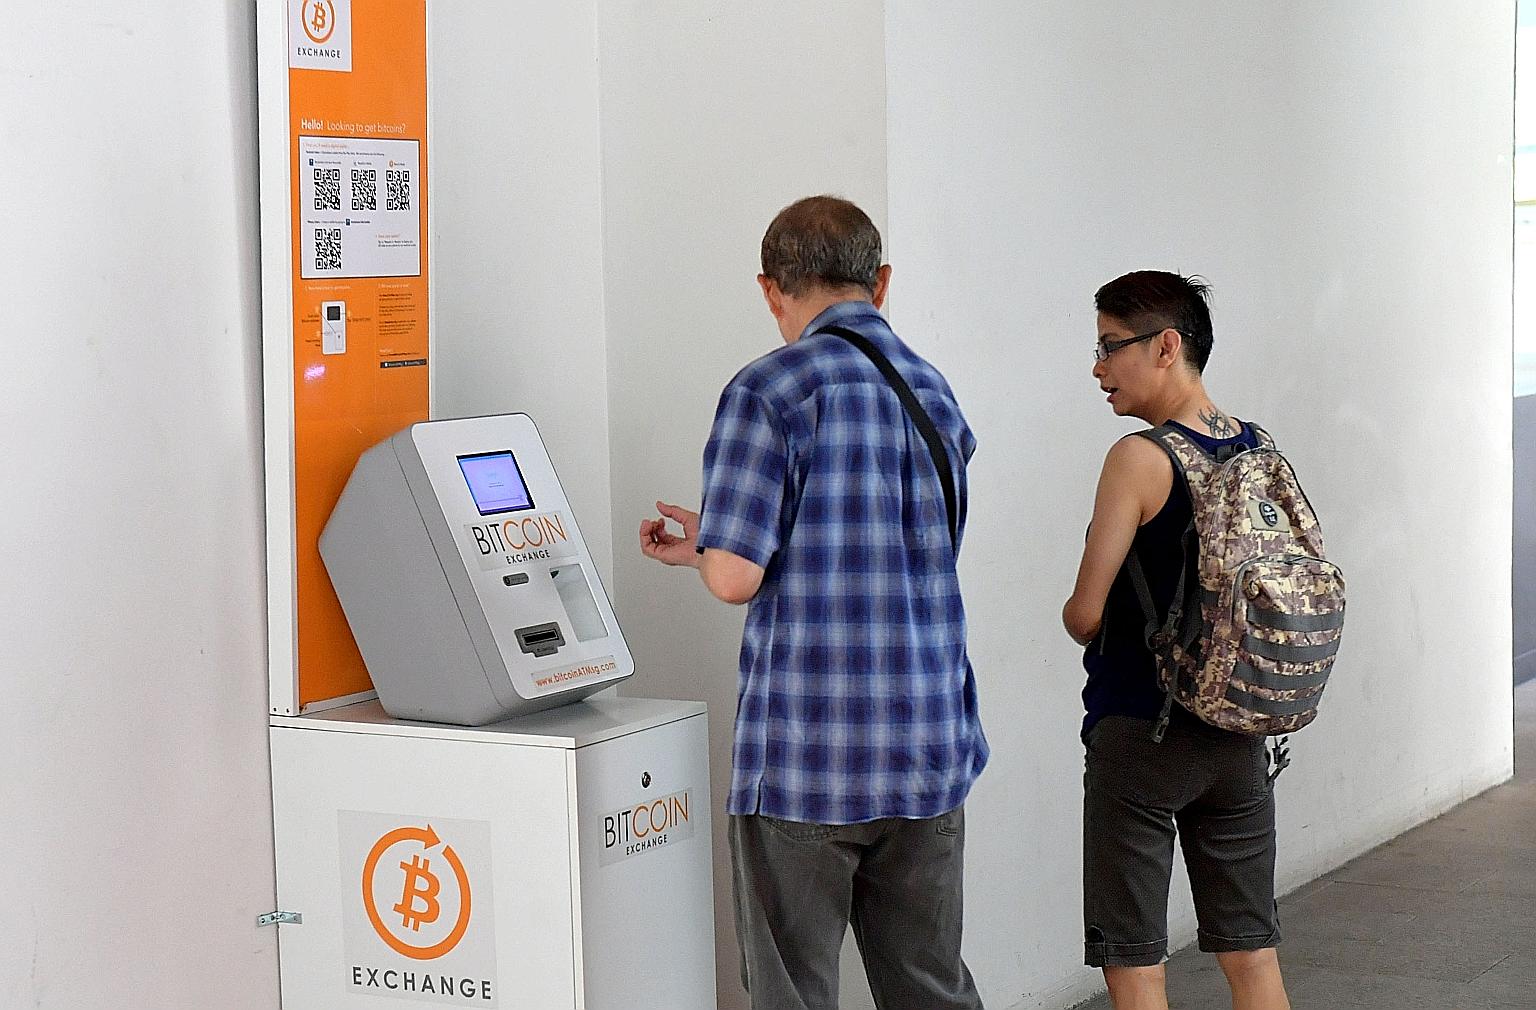 Bitcoin atm machine in singapore 0.02931882 btc equals usd